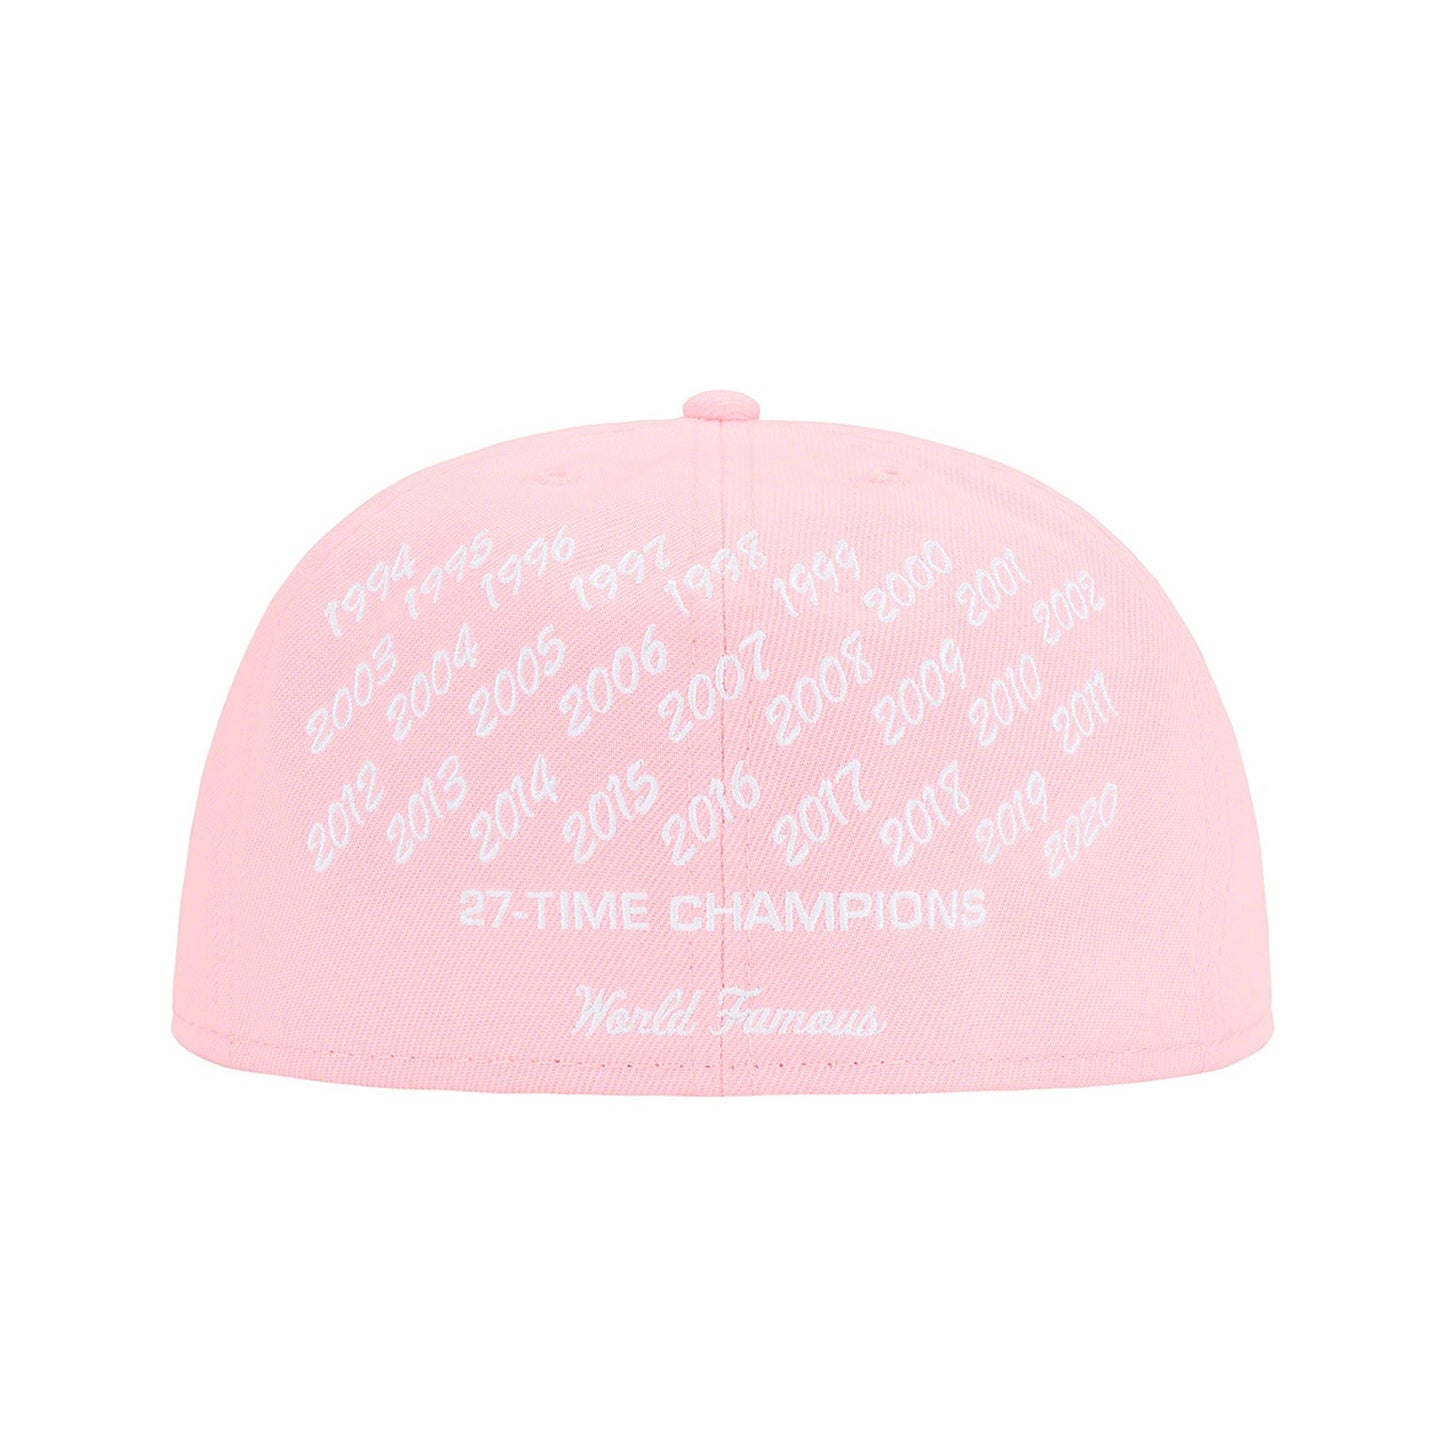 Supreme Champions Box Logo New Era Cap Pink